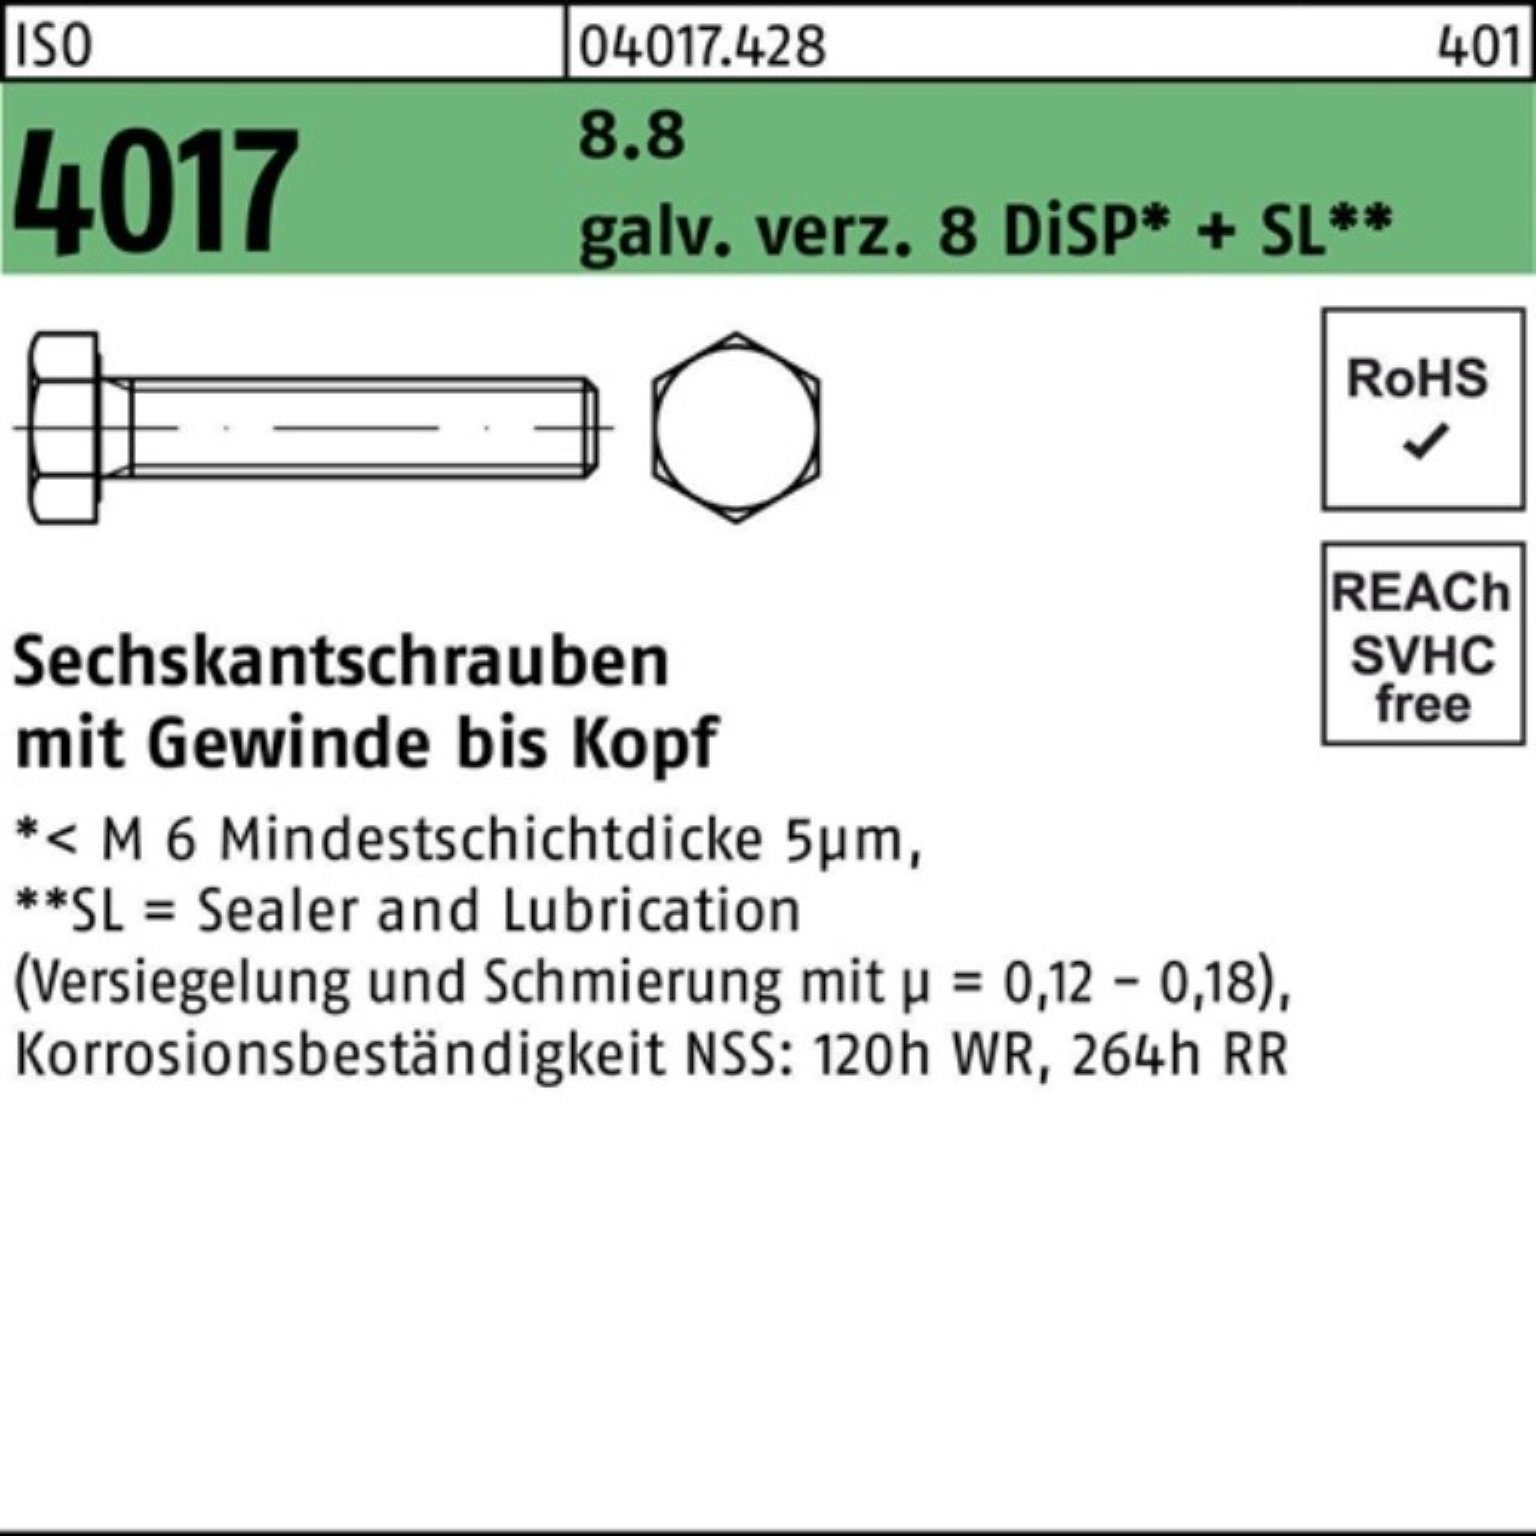 Bufab Sechskantschraube 100er Pack Sechskantschraube VG 4017 ISO galv.verz. 8.8 DiS 8 180 M16x